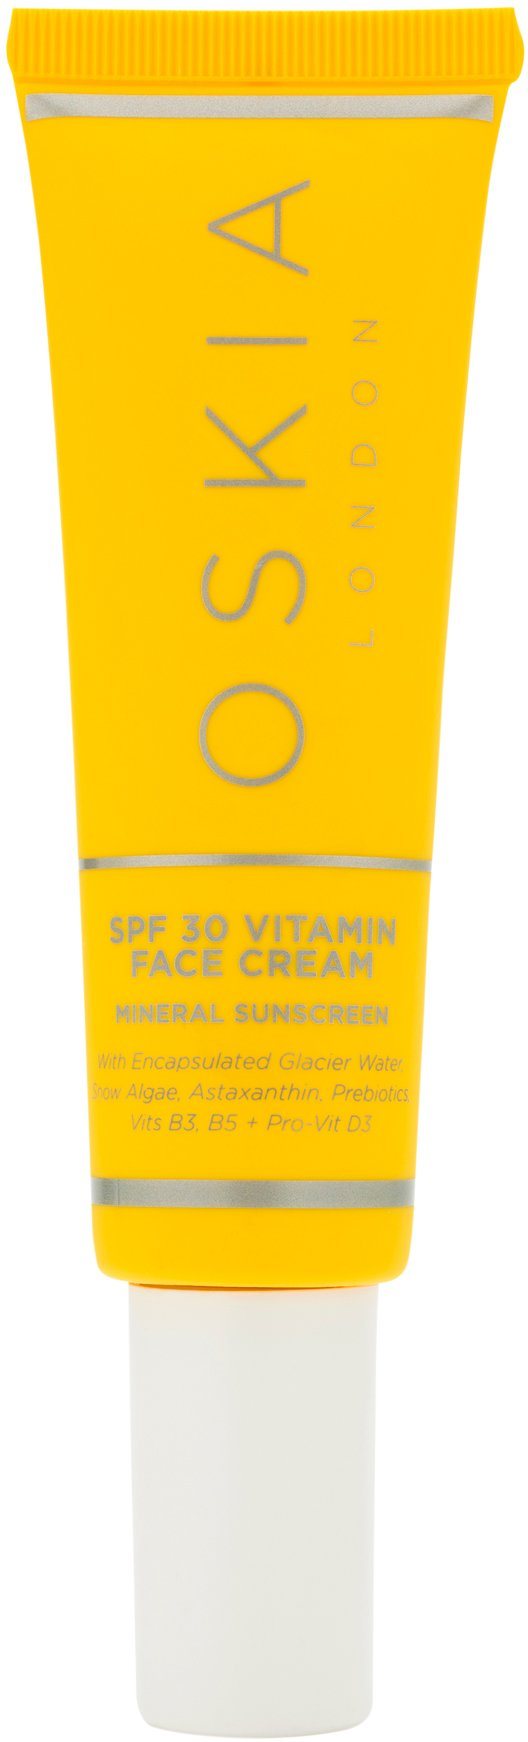 Oskia - Spf 30 Vitamin Face Cream Creme 